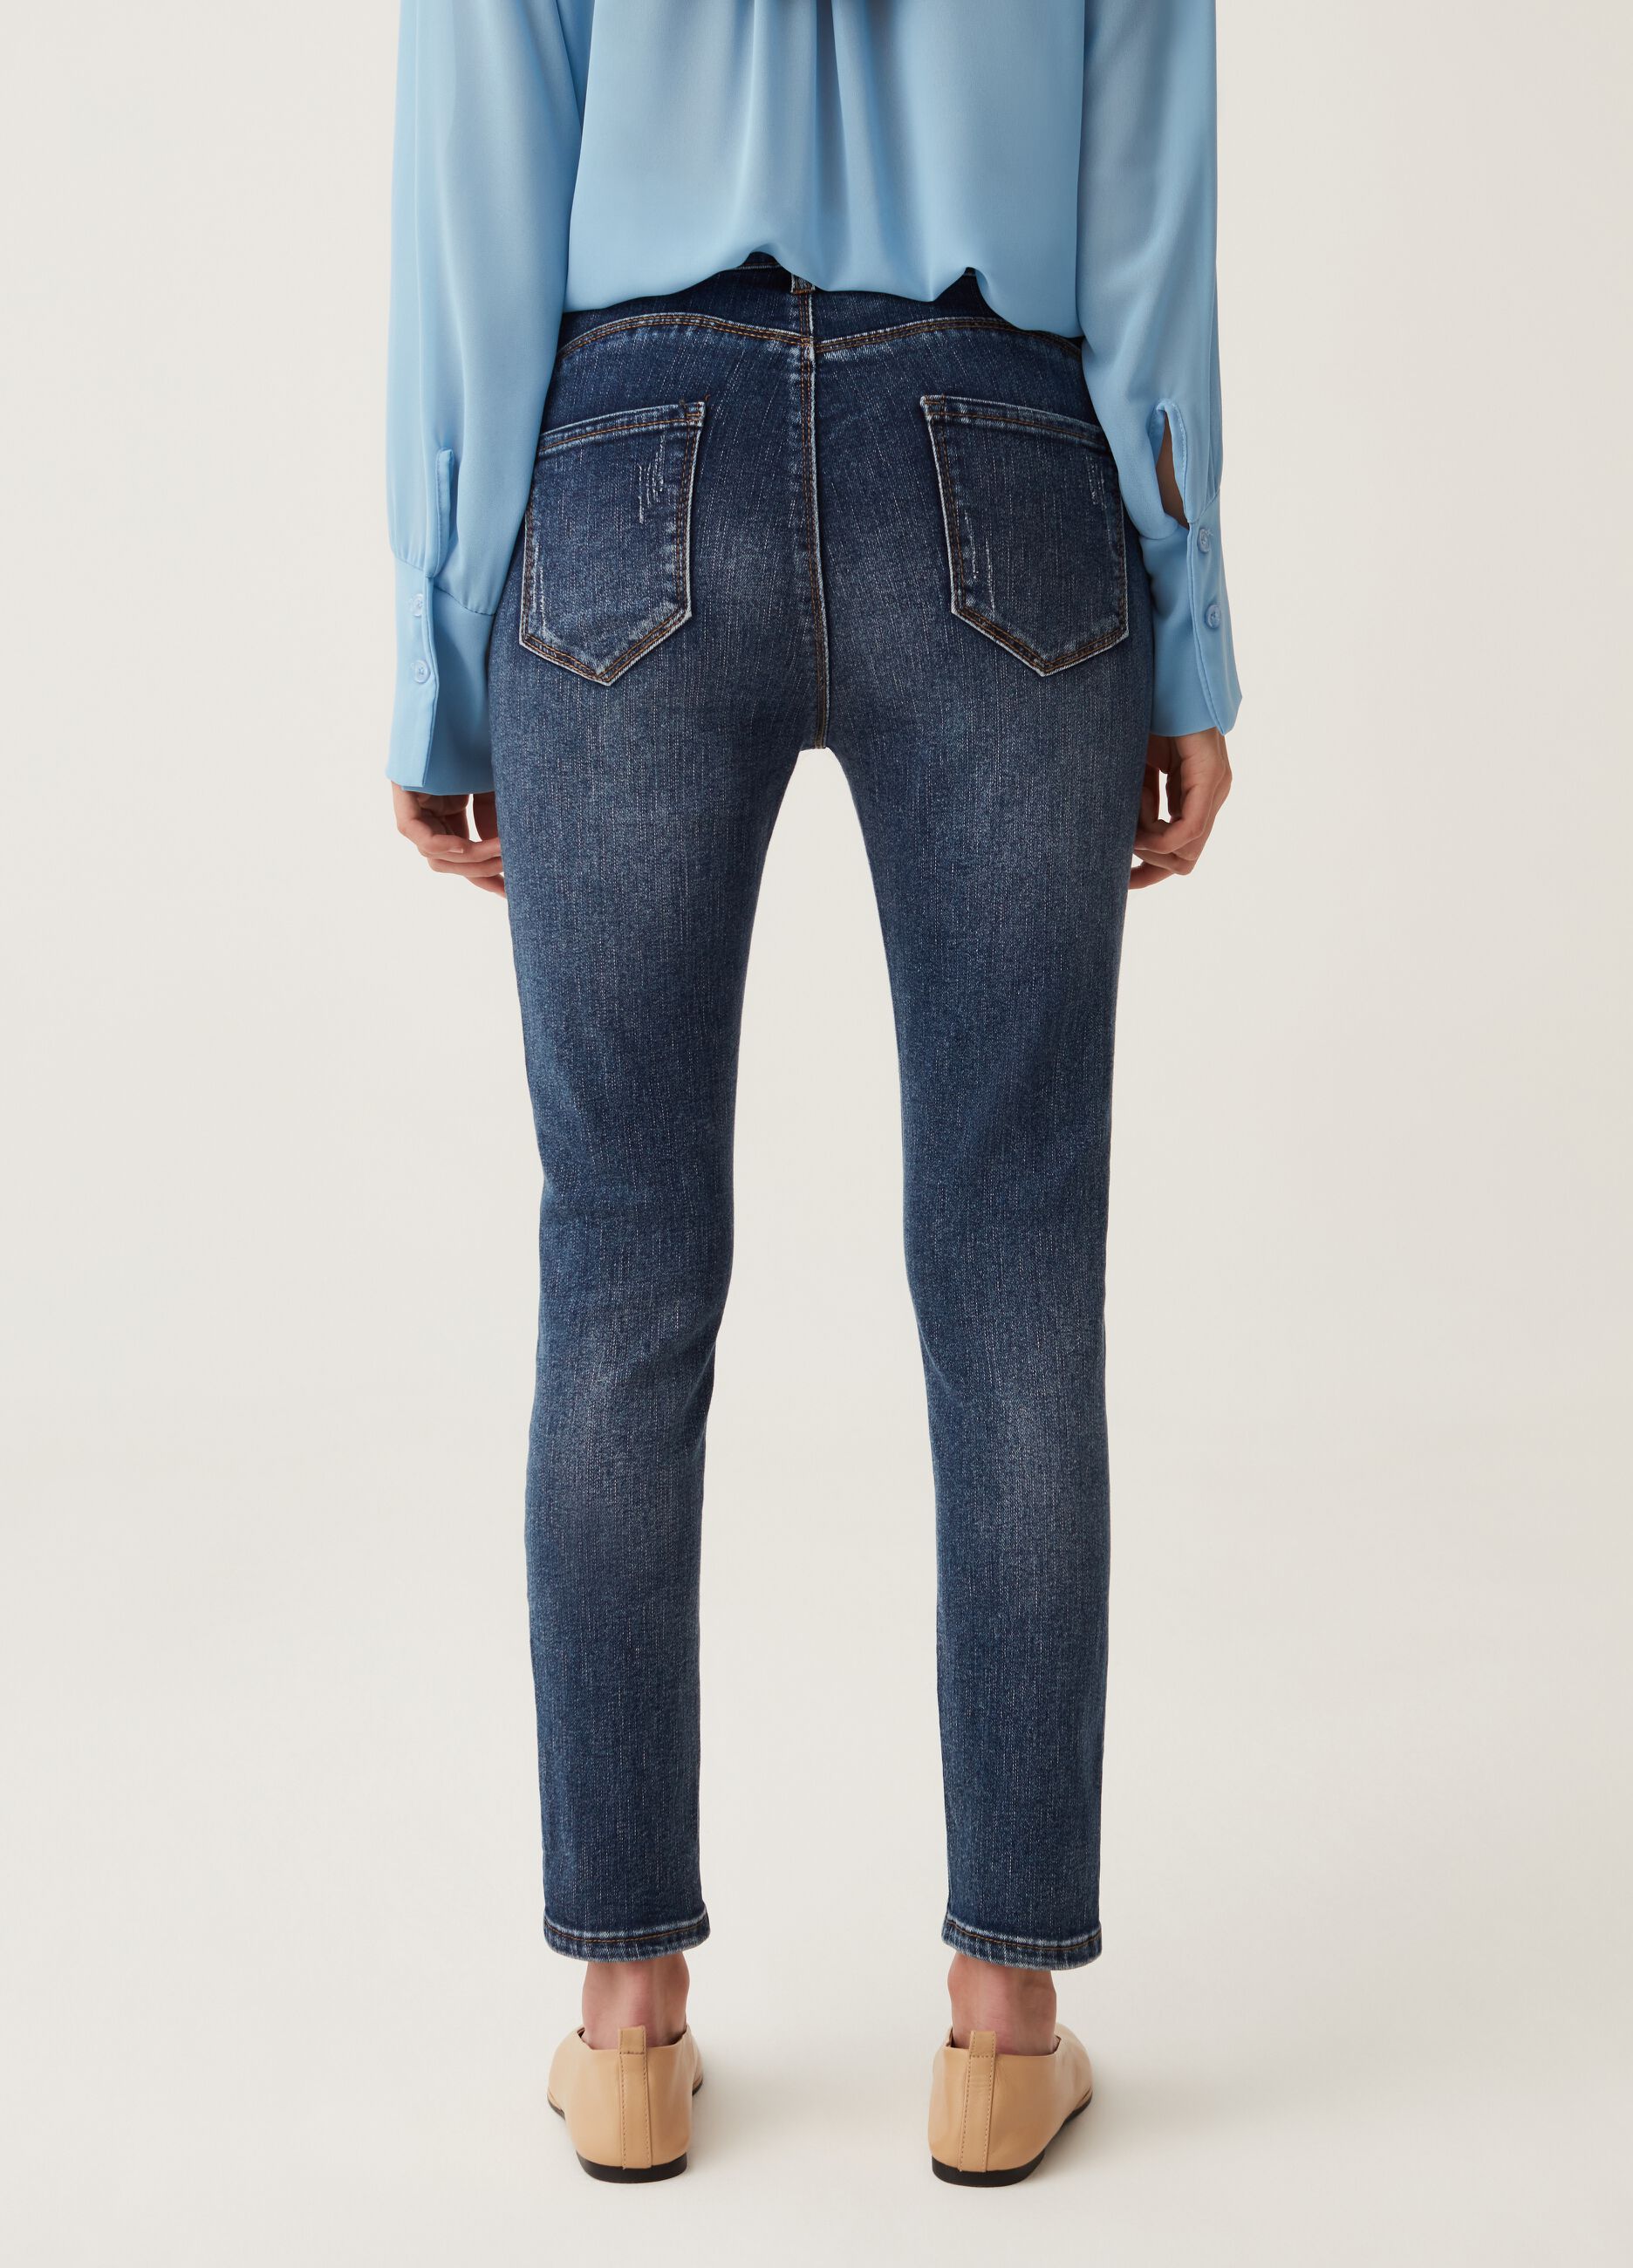 Hybrid slim-fit jeans with worn look